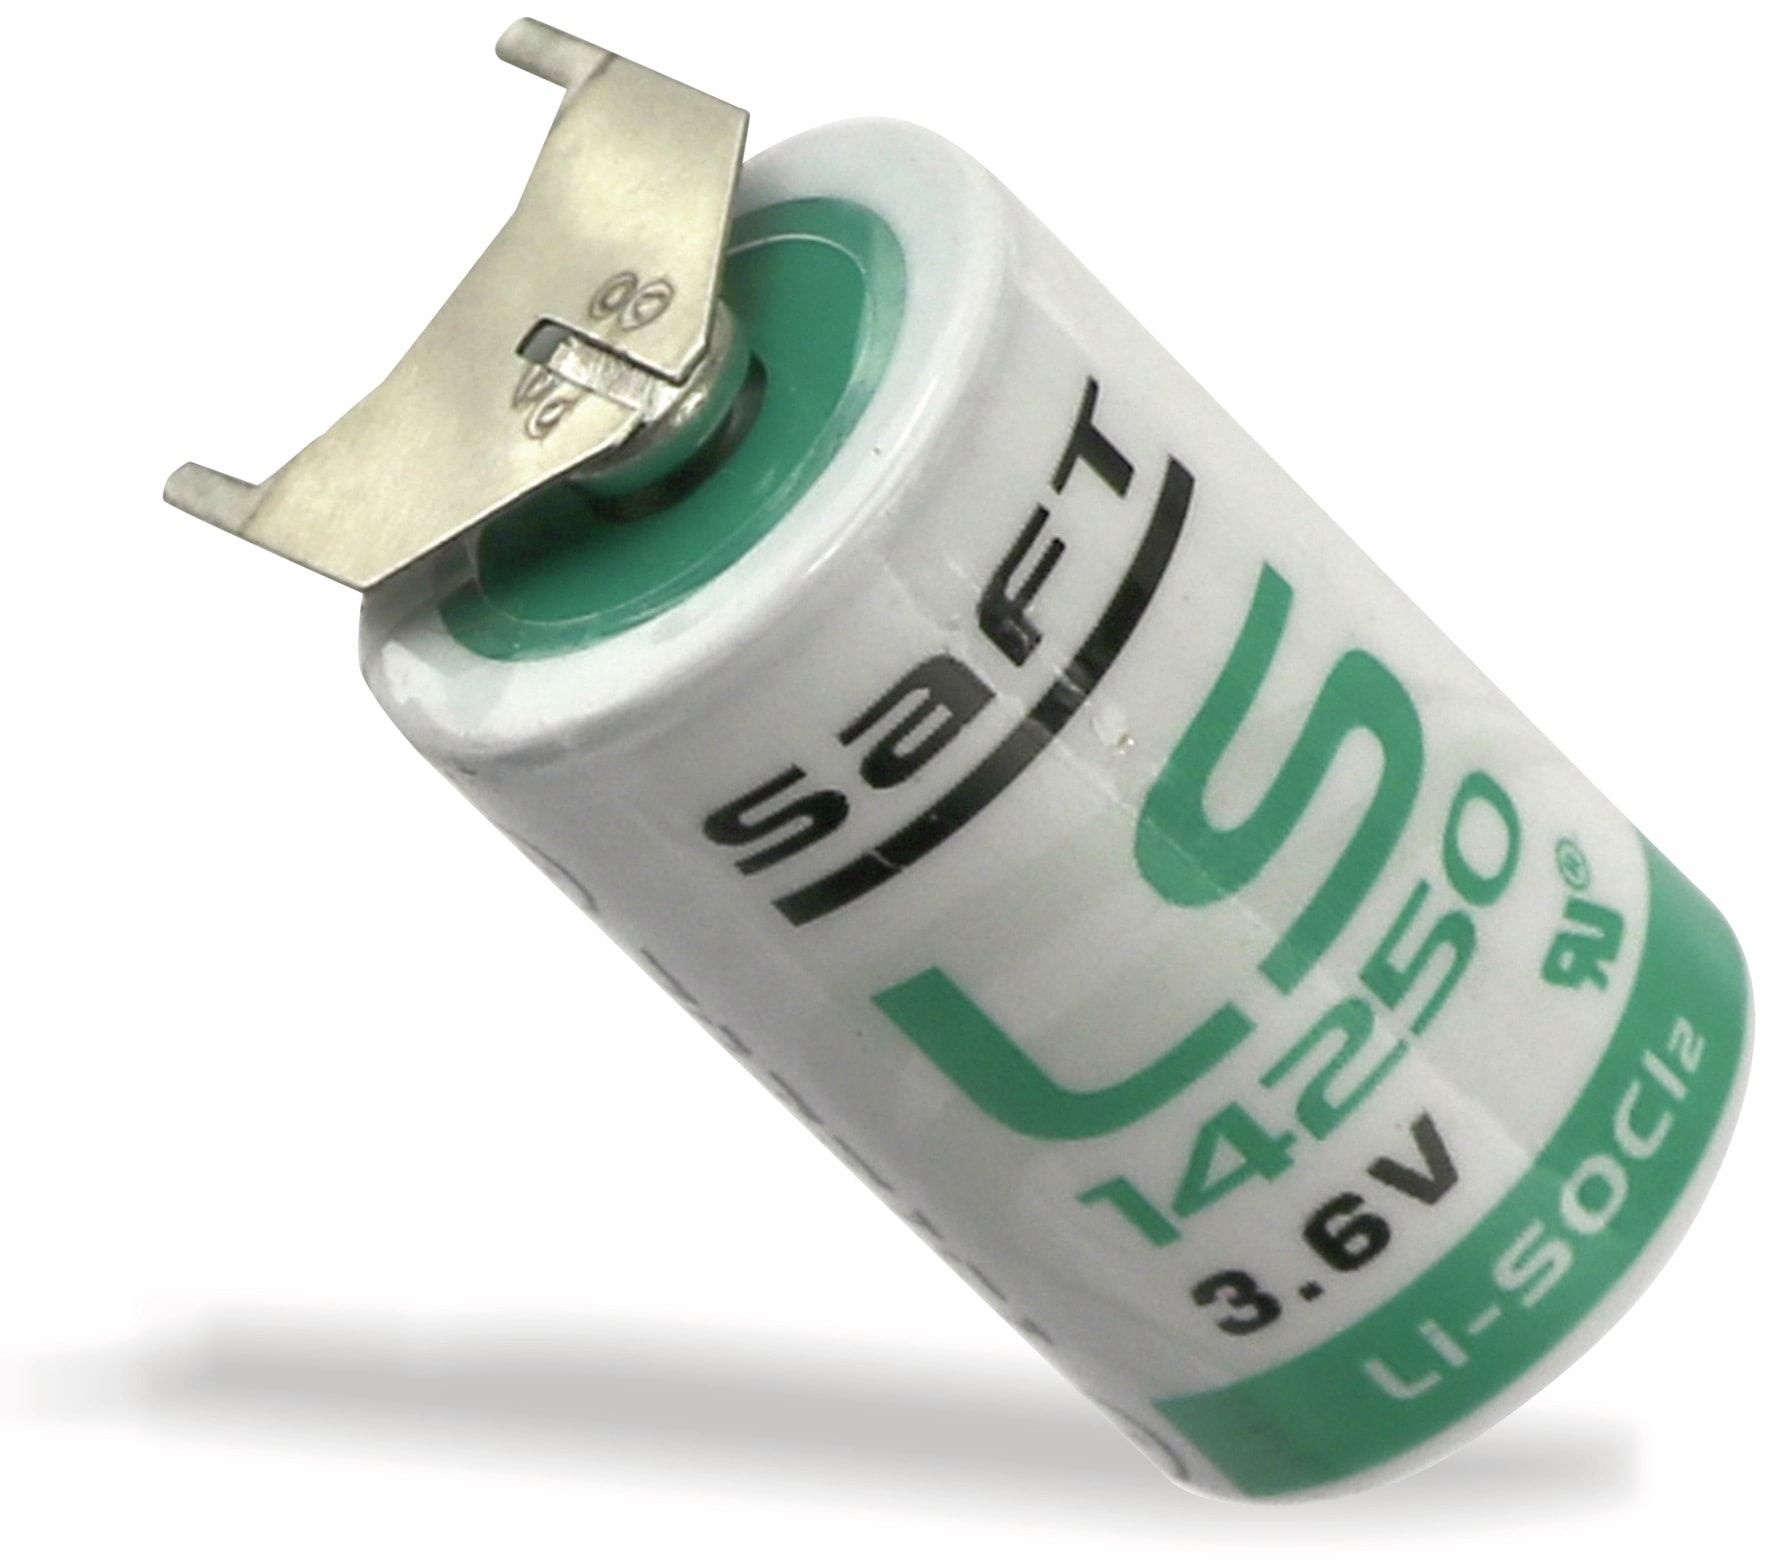 Batterie 3,6 ++/-, SAFT LS V-, 14250-3PF, mAh 2/1 1/2 (Li-SOCl2) AA, Lithium-Thionylchlorid Print 1200 Lithium-Batterie